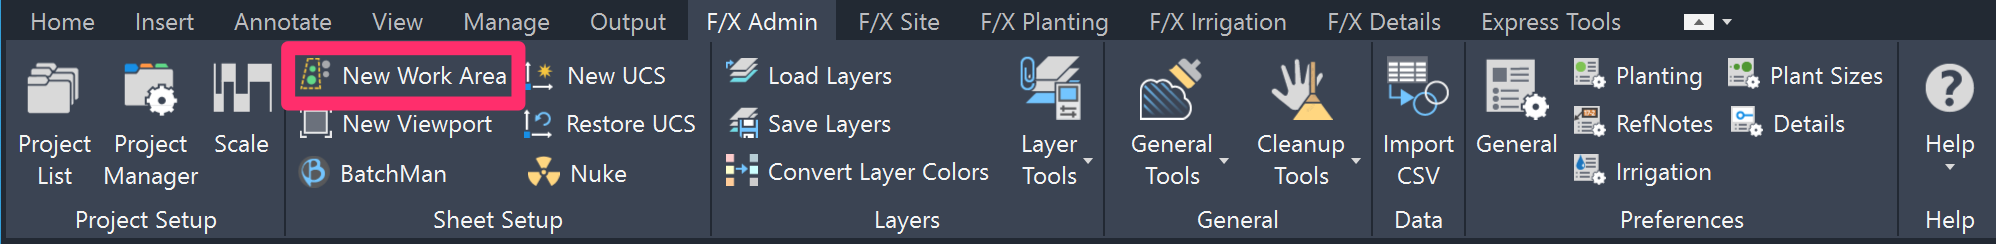 F/X Admin ribbon, New Work Area button